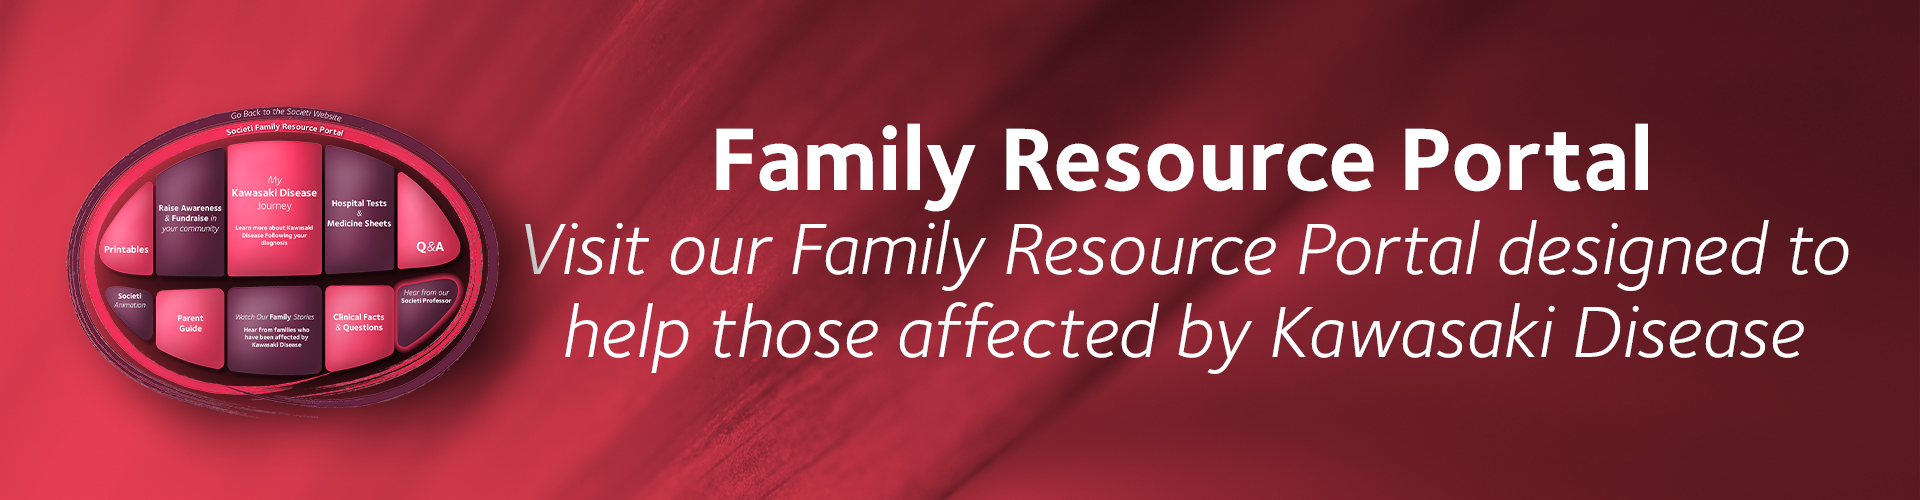 Family Resource Portal